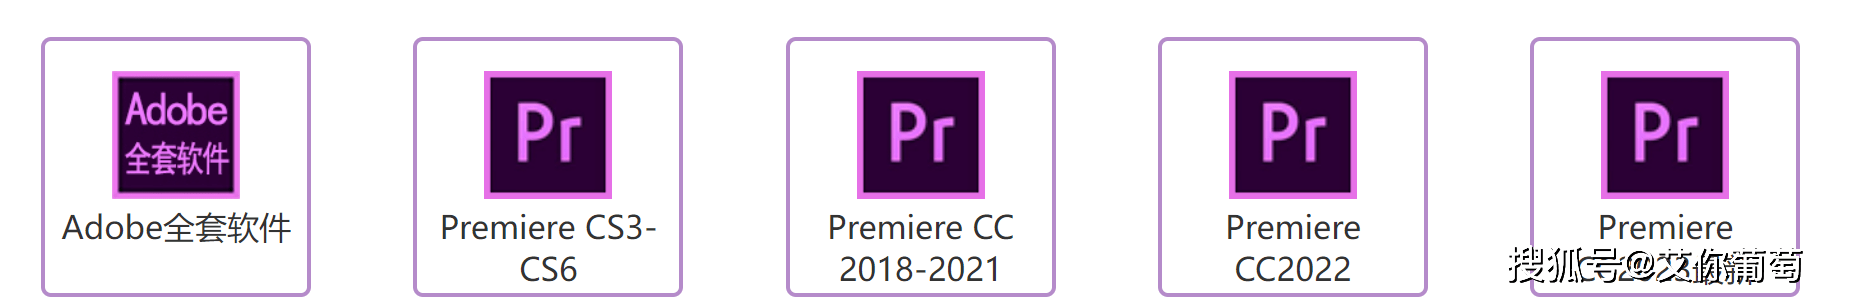 Adobe Premiere2023破解版资源下载pr2023绿色版